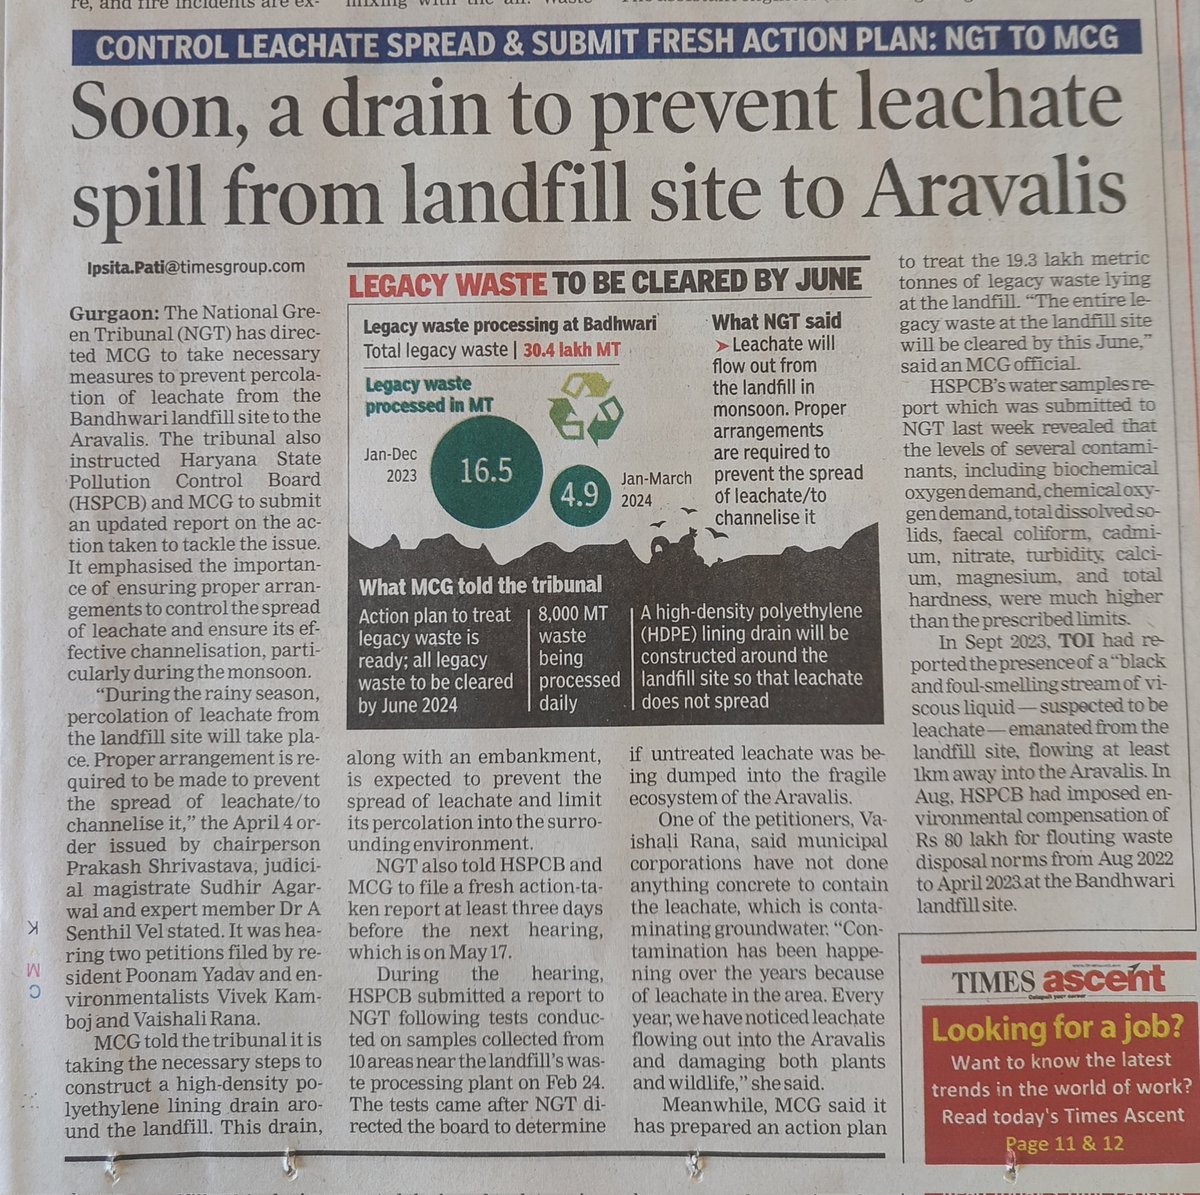 Control leachate spill into #Aravalis, NGT asks @MunCorpGurugram; civic body to build drain to prevent spread @rahuulchoudhary @lifeindia2016 @SethiRuchikaT @SunilHarsana Read the full story here shorturl.at/CFGLW